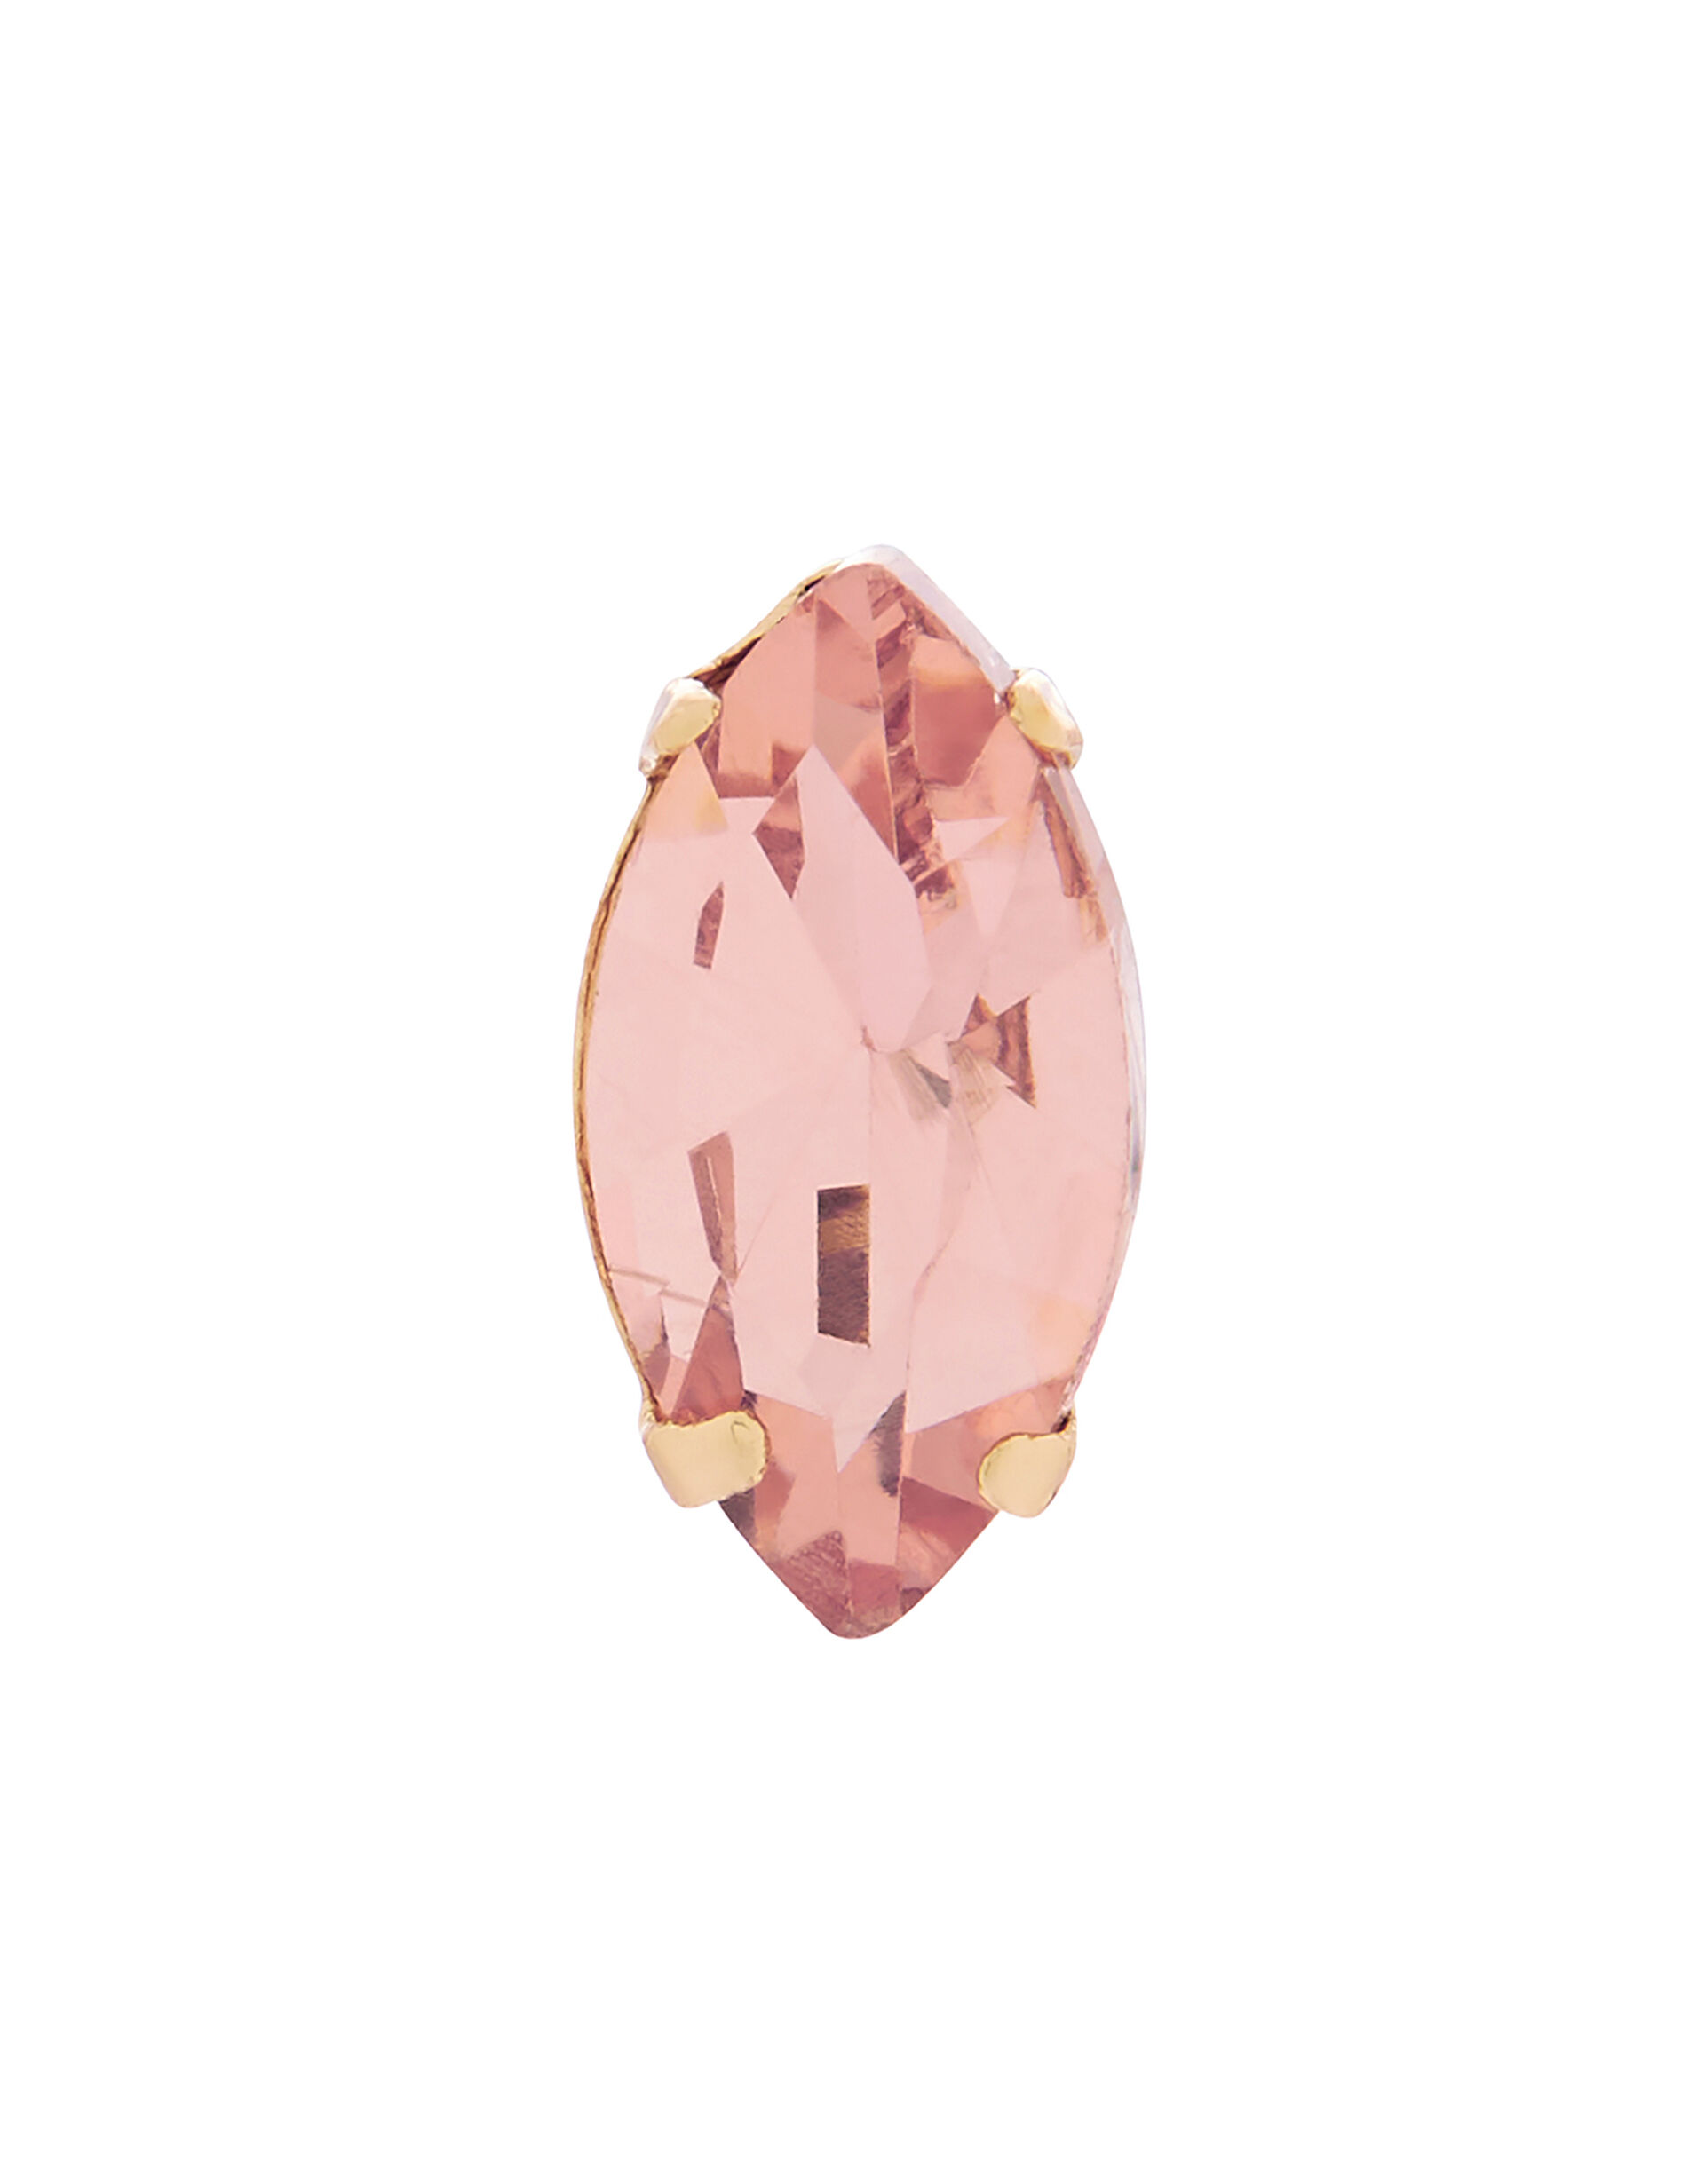 Navette Crystal Flat-Back Earrings, , large